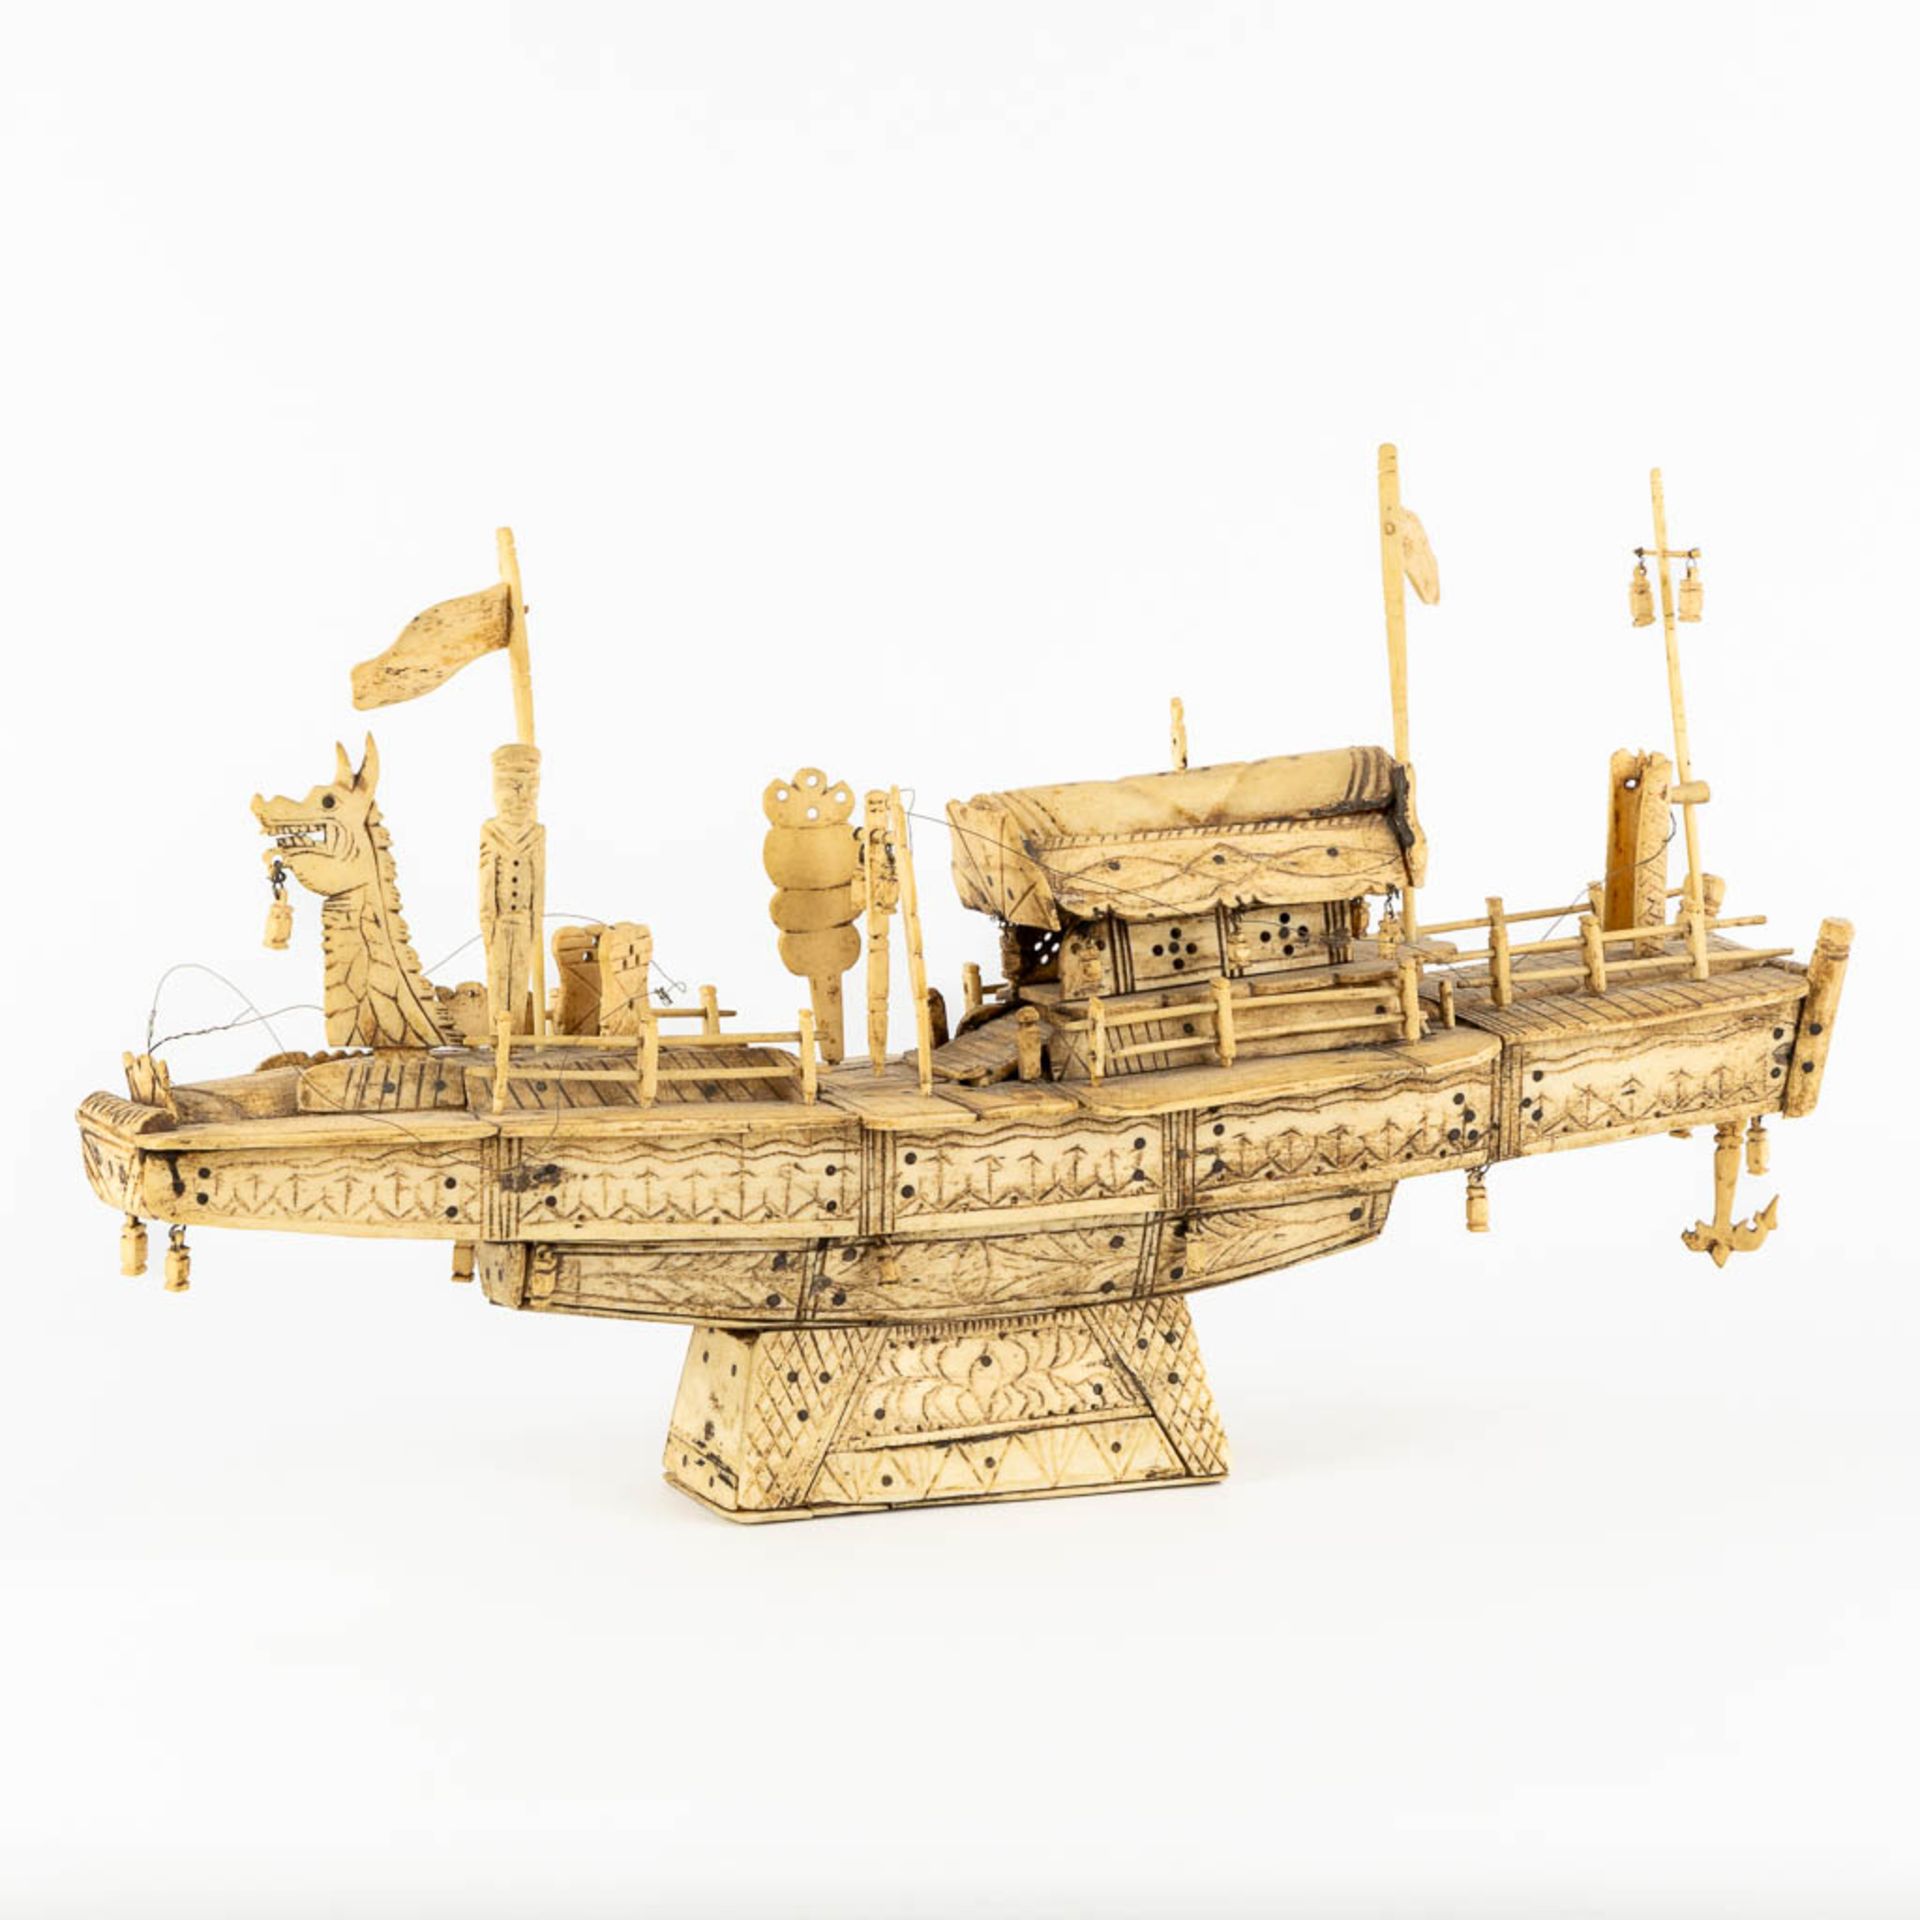 An antique Chinese model of a ship, sculptured bone. Circa 1900. (L:13 x W:50 x H:28 cm)